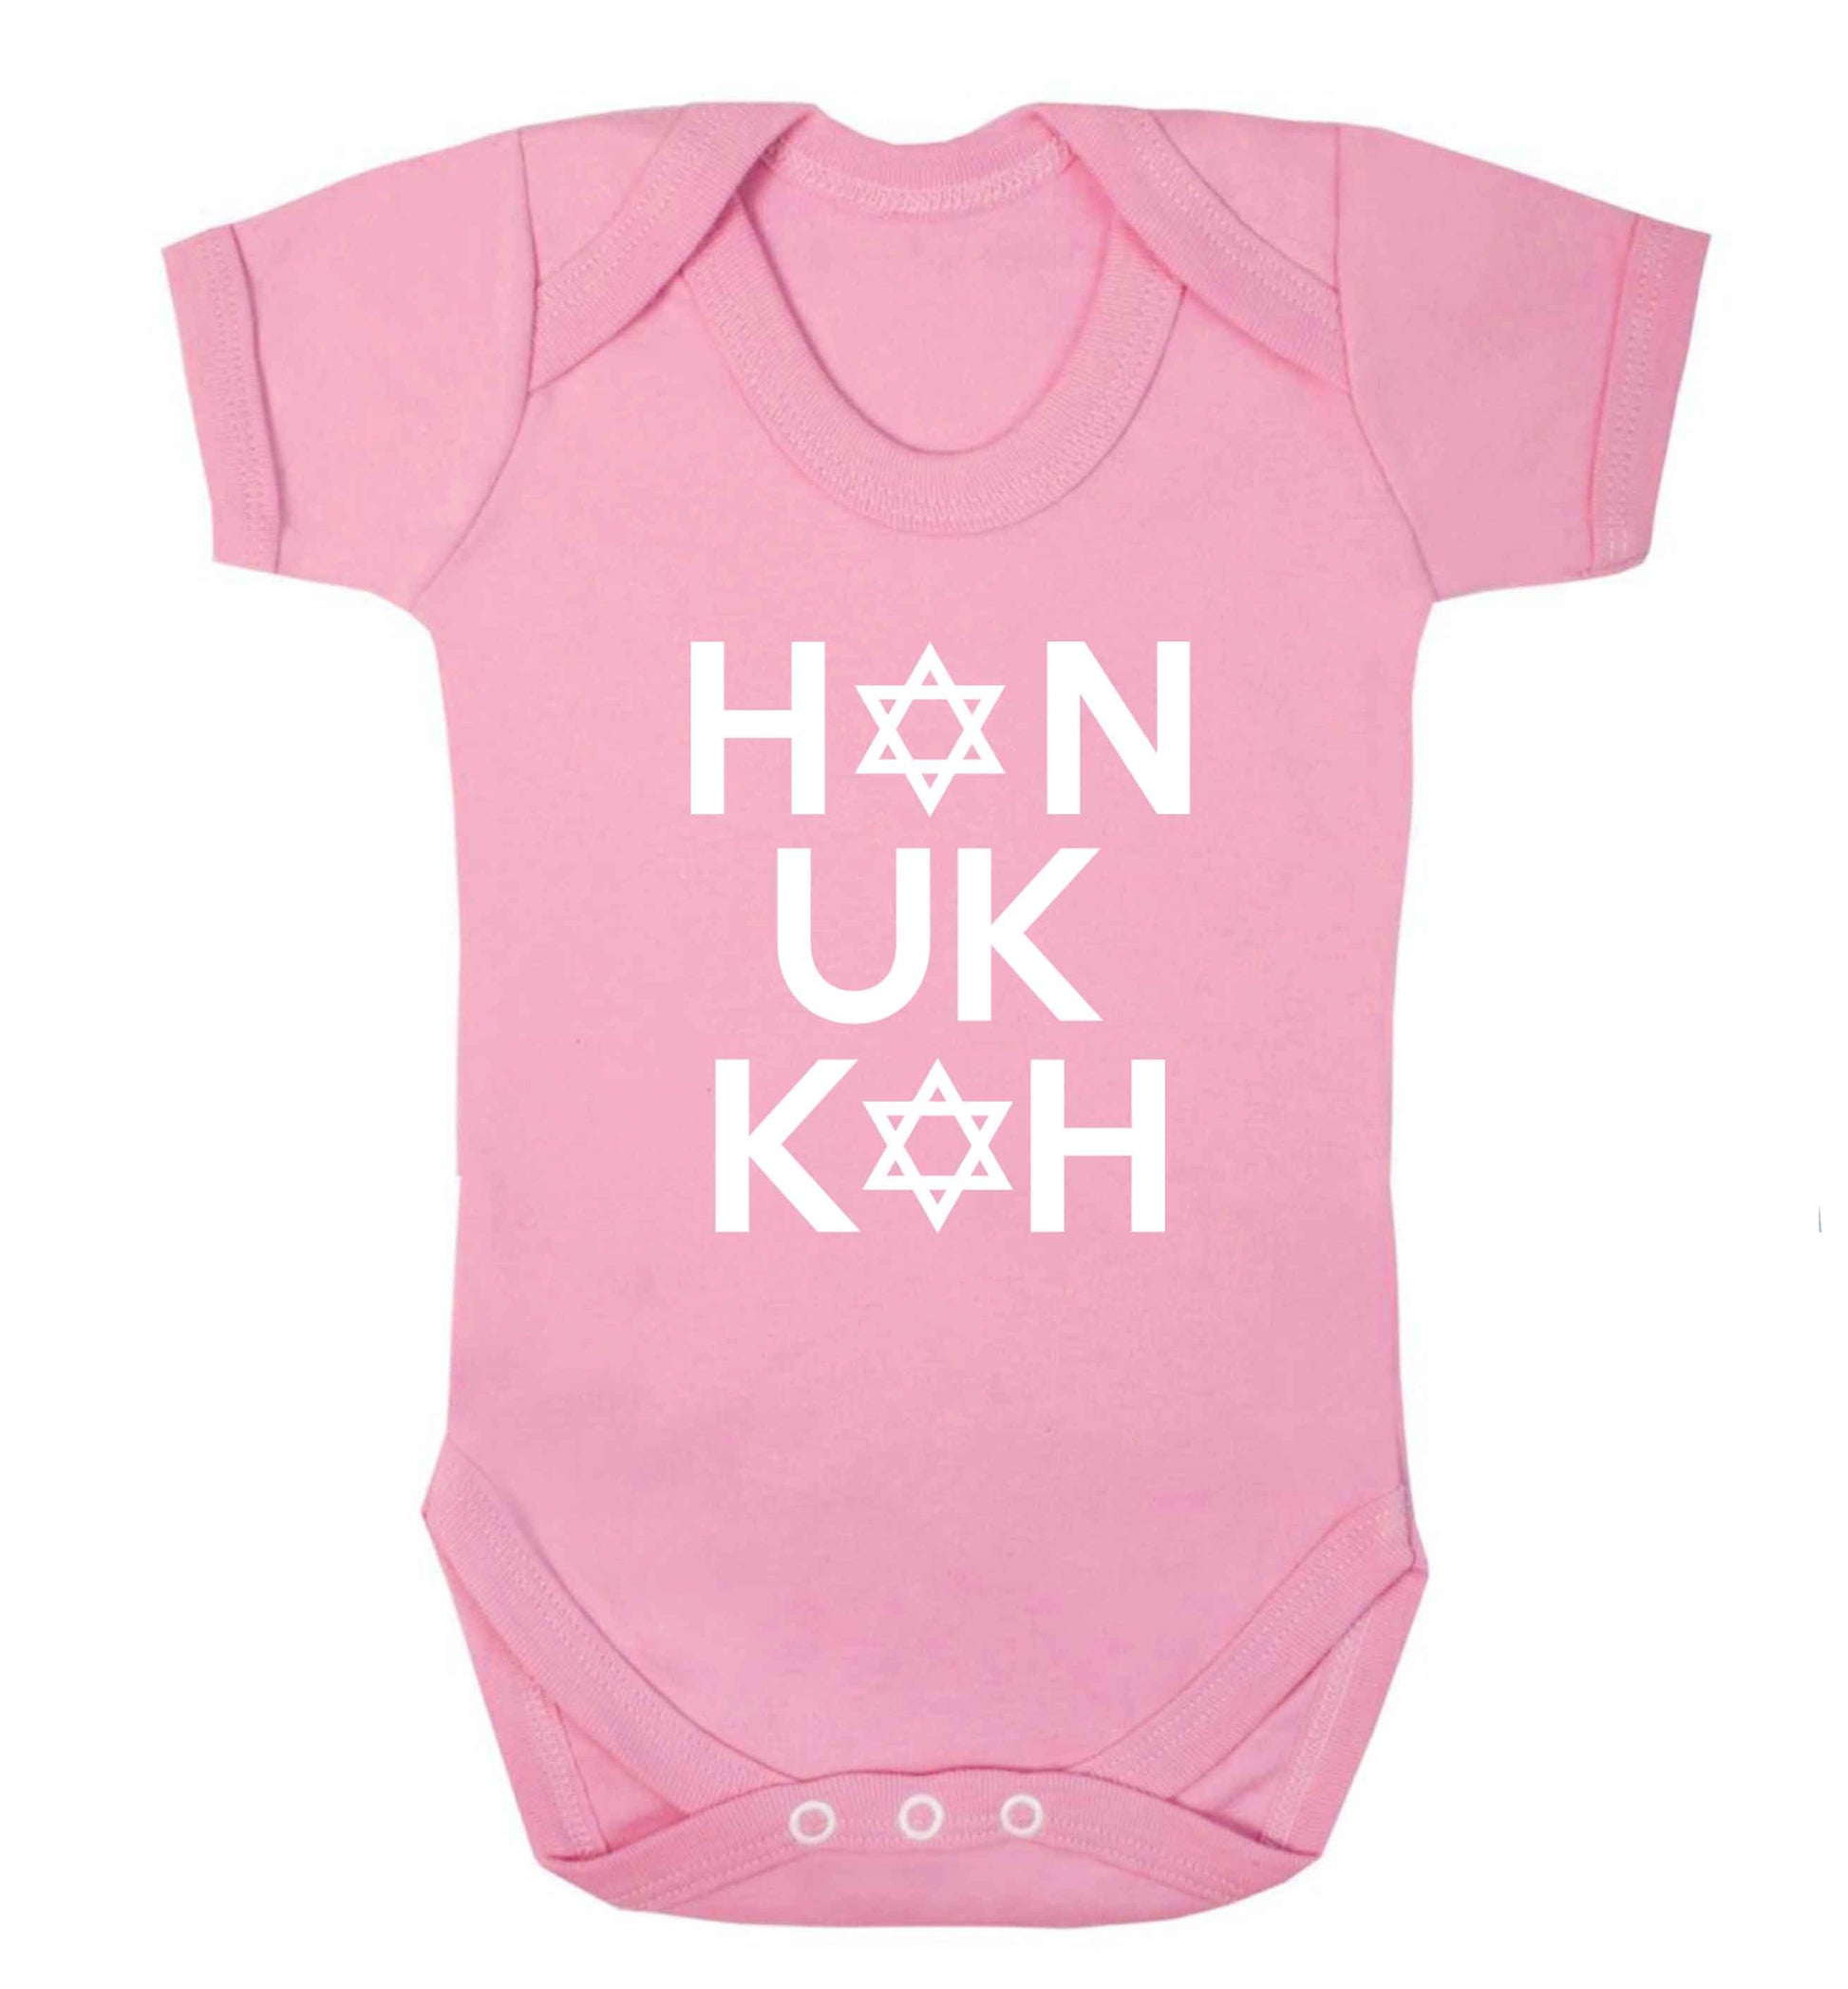 Han uk kah  Hanukkah star of david baby vest pale pink 18-24 months